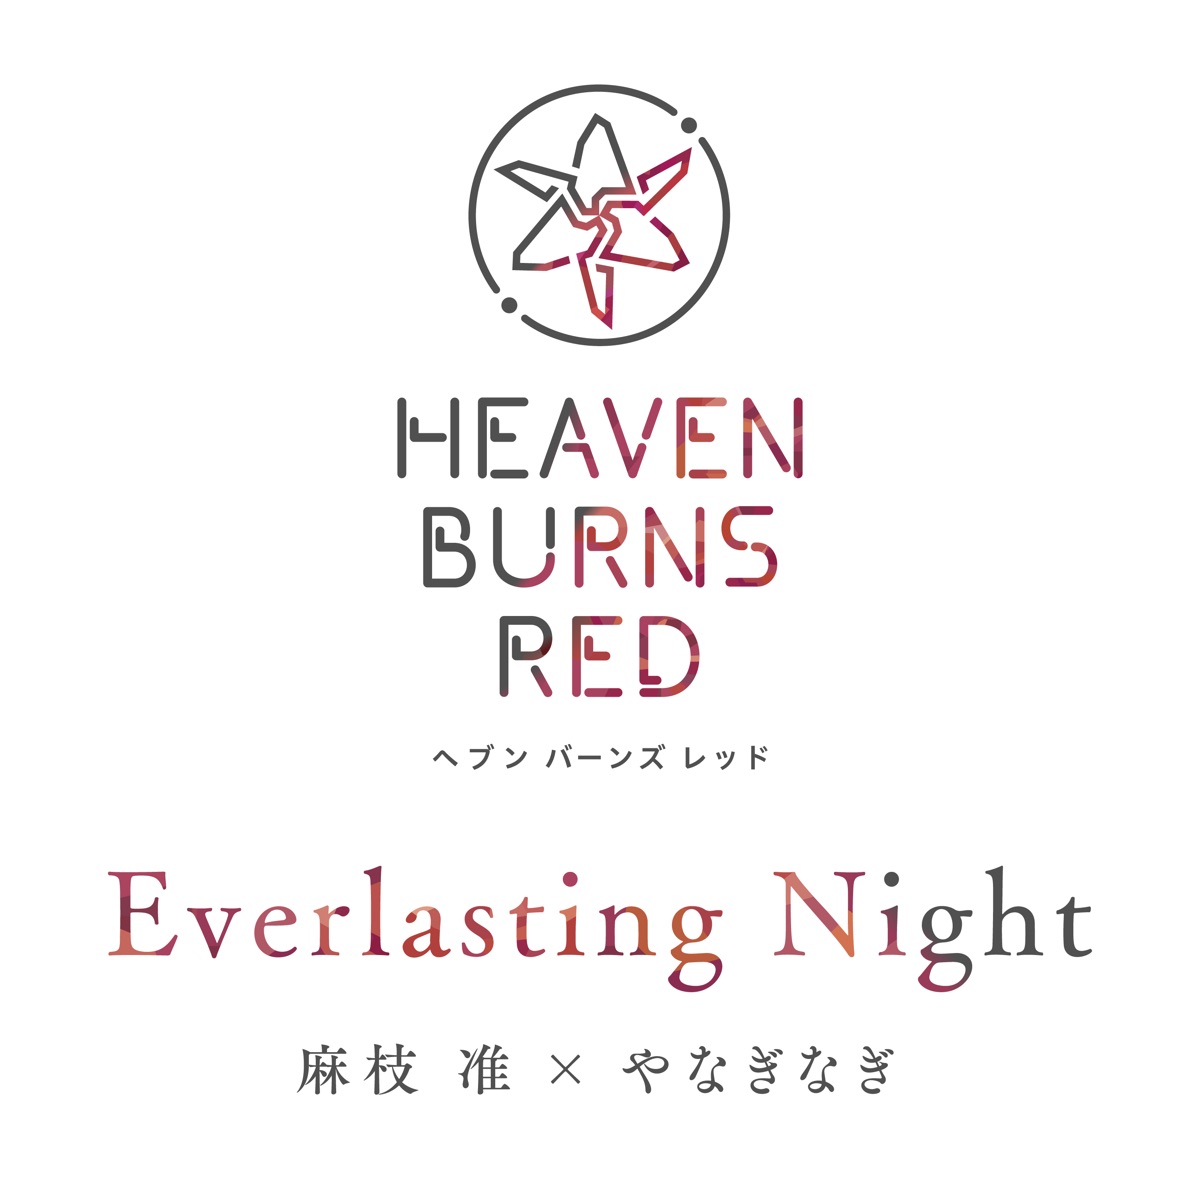 Cover art for『Jun Maeda x yanaginagi - Everlasting Night』from the release『Everlasting Night